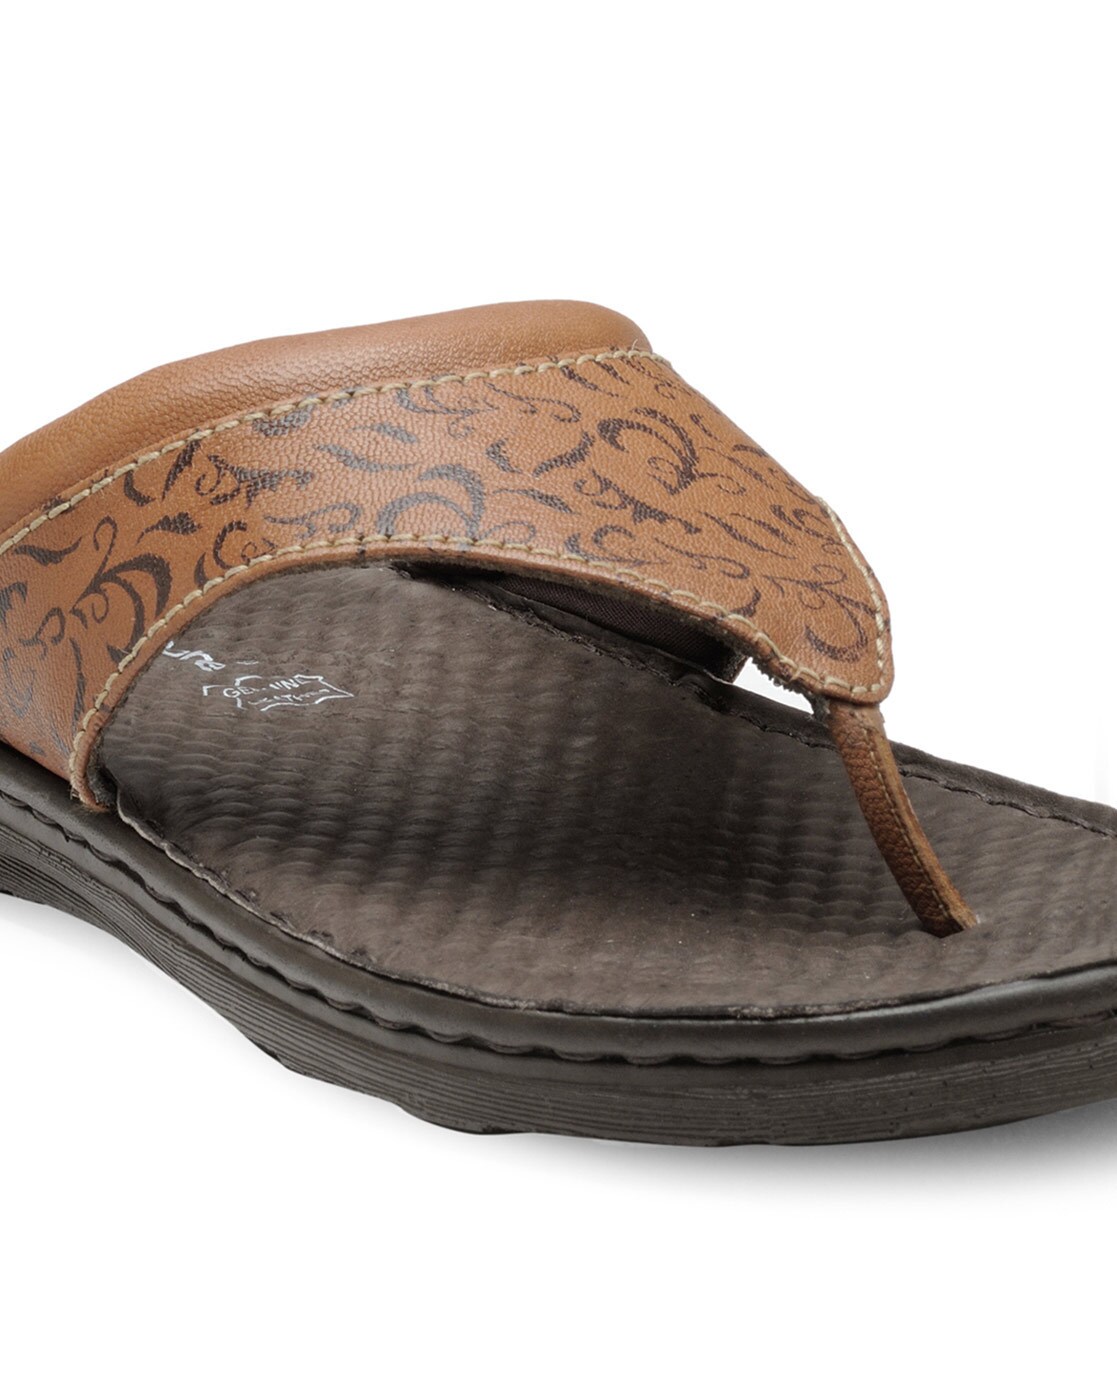 FRANCO LEONE Men Slippers - Buy Brown Color FRANCO LEONE Men Slippers  Online at Best Price - Shop Online for Footwears in India | Flipkart.com